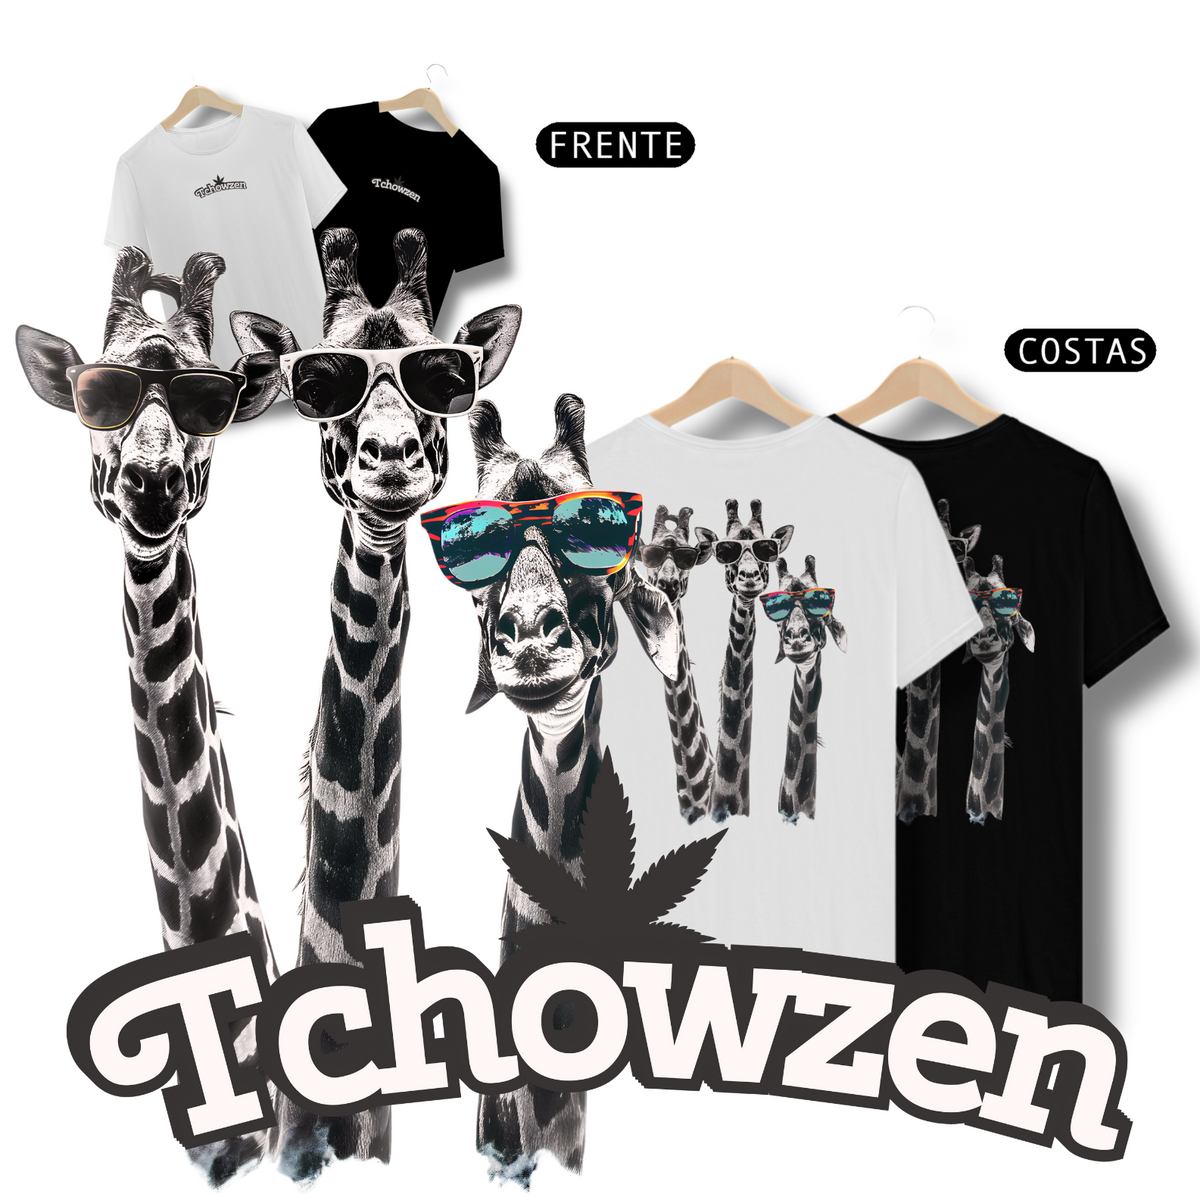 Nome do produto: Girafas Tchowzen